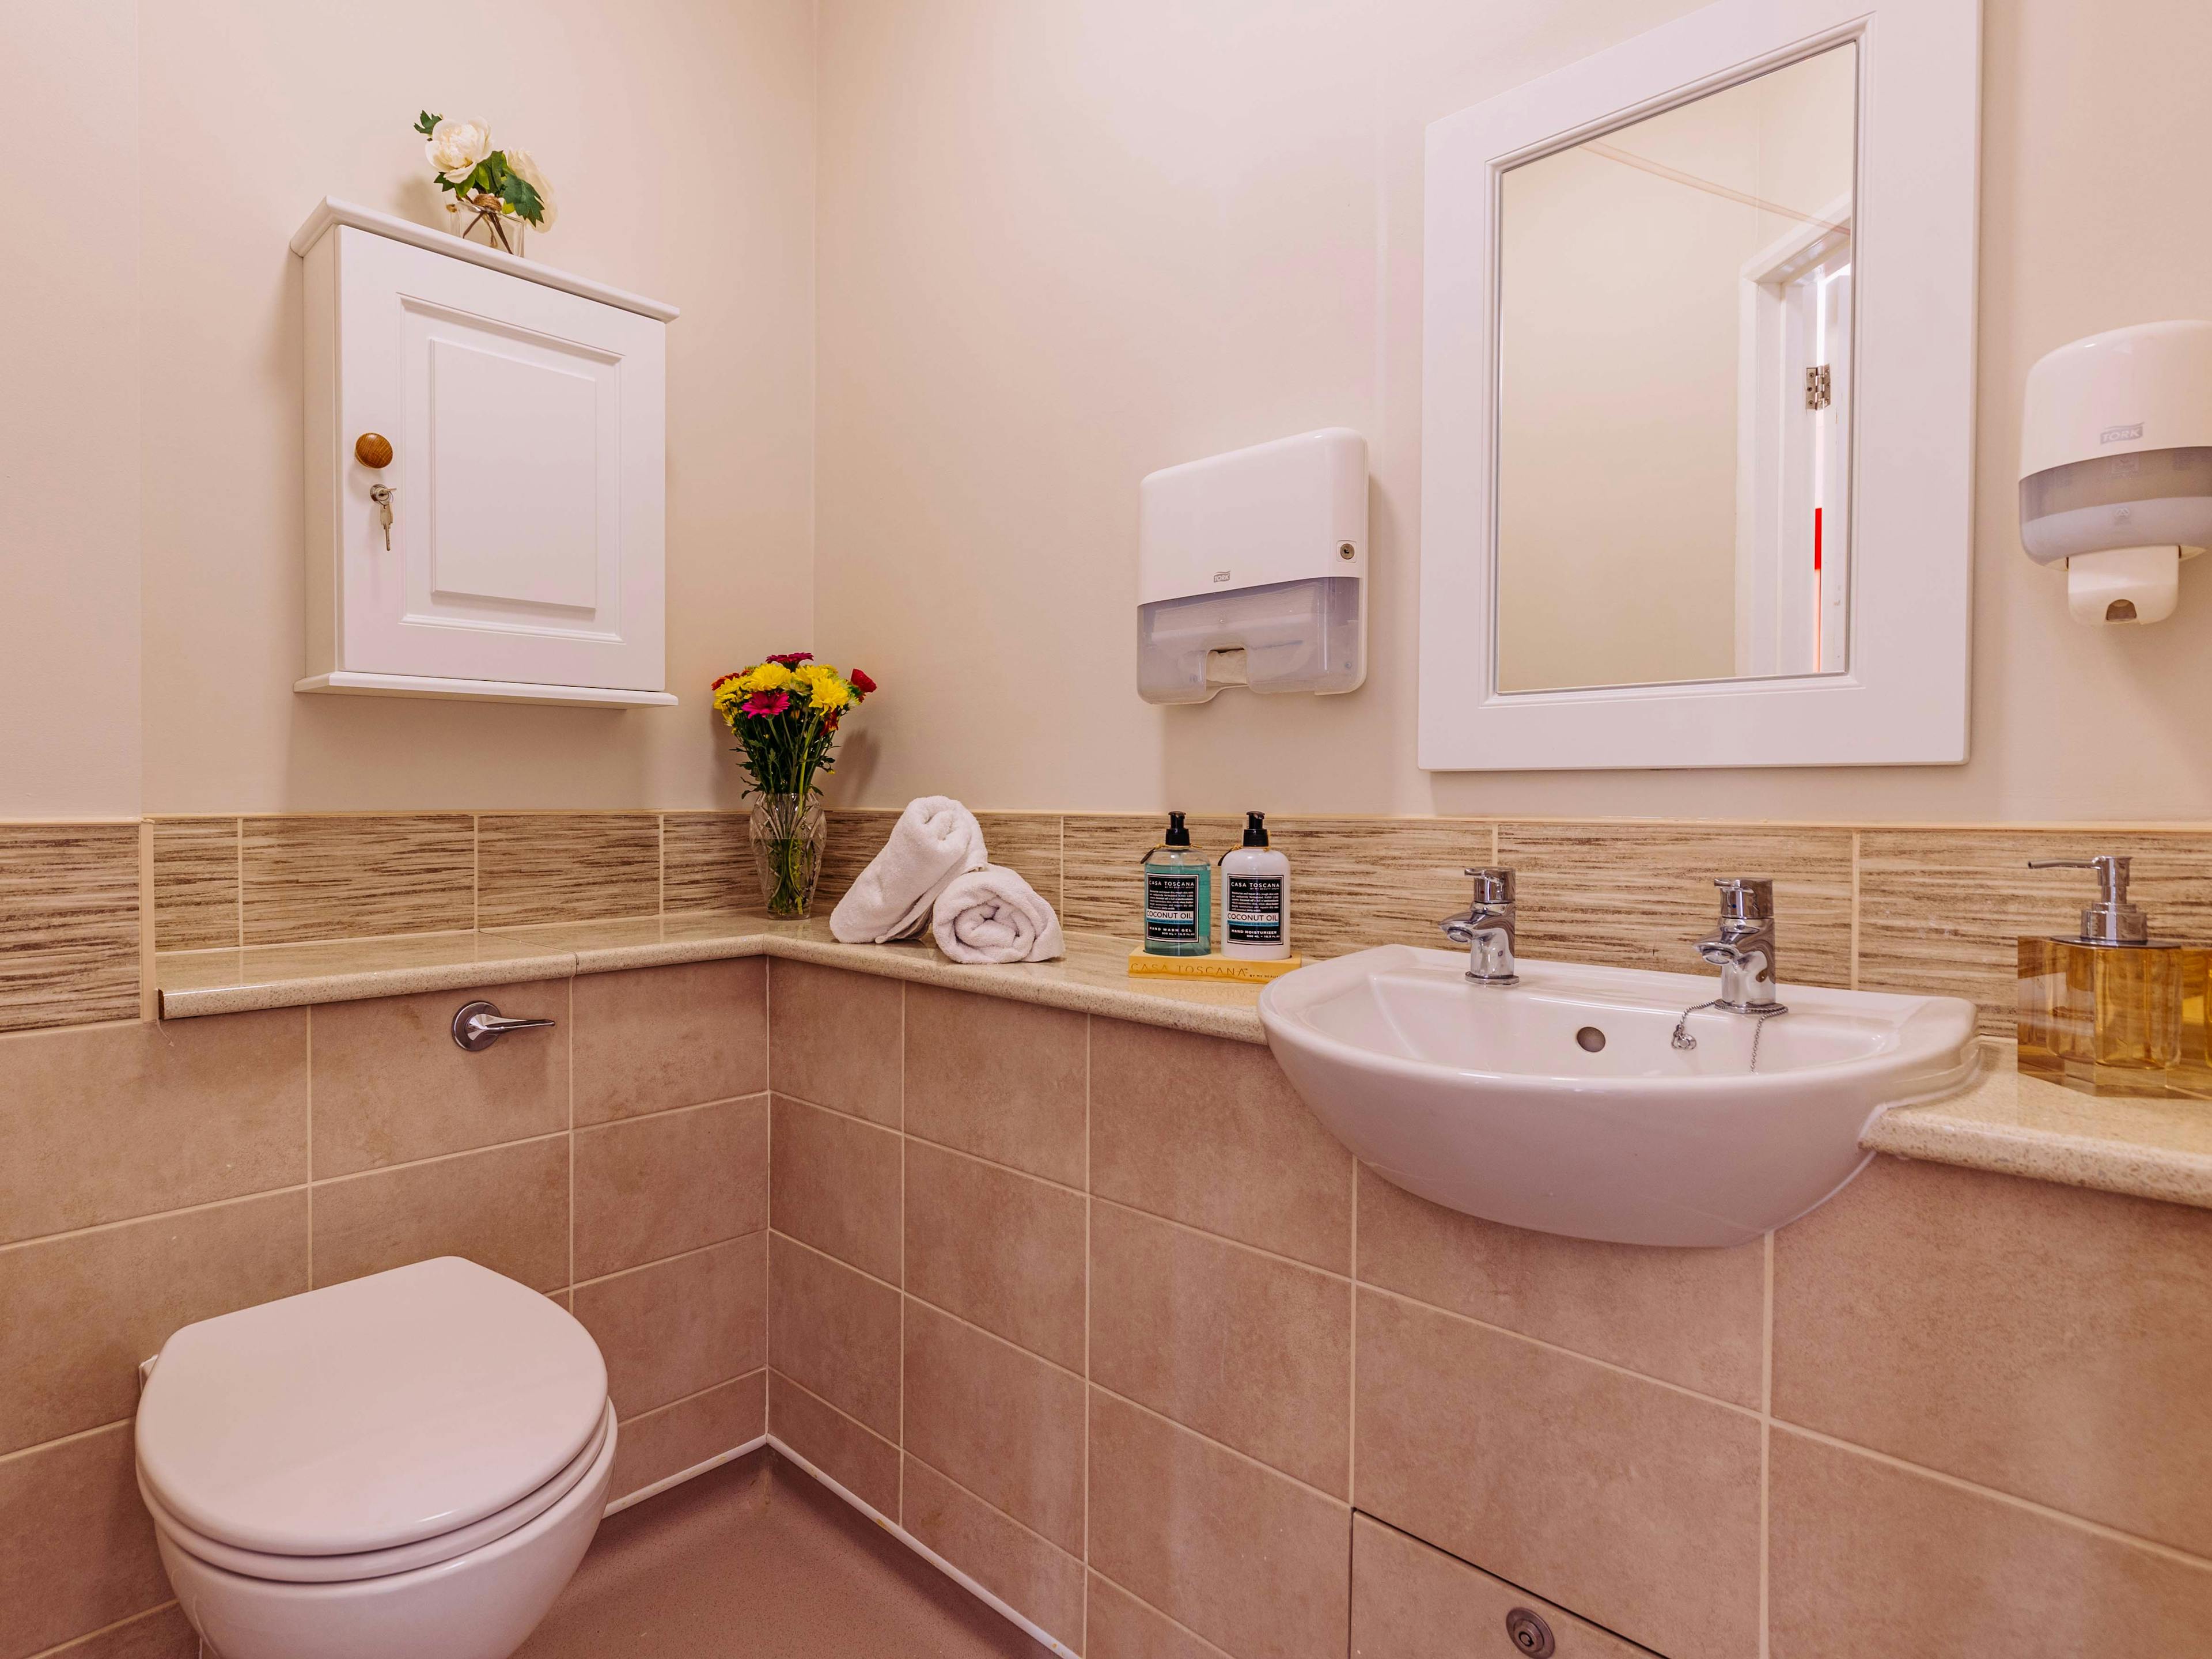 Bathroom at Lanercost House Care Home in Carlisle, Cumbria